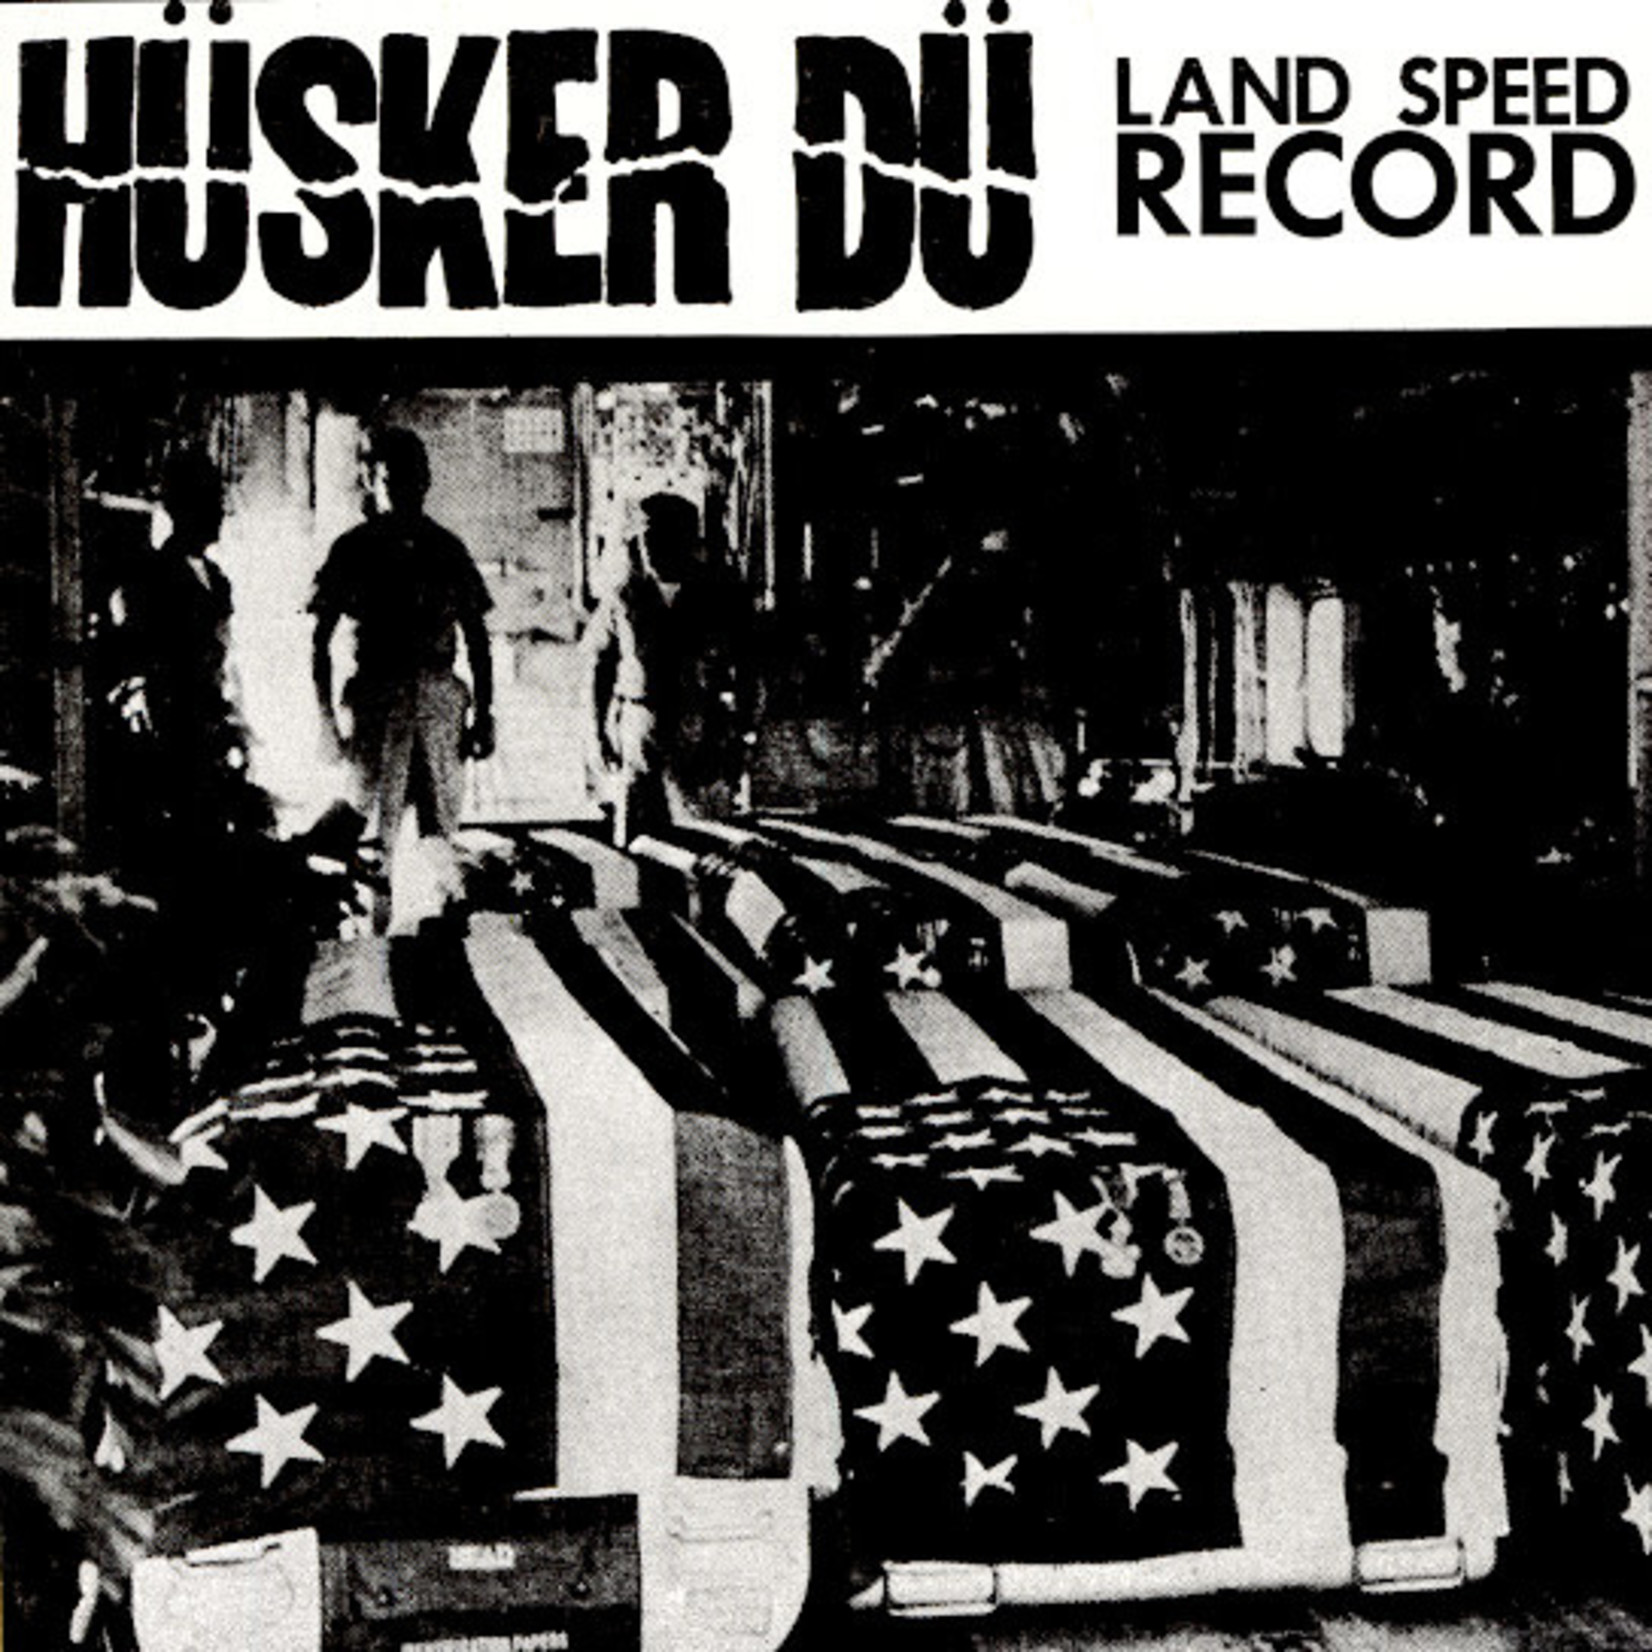 [New] Husker Du - Land Speed Record